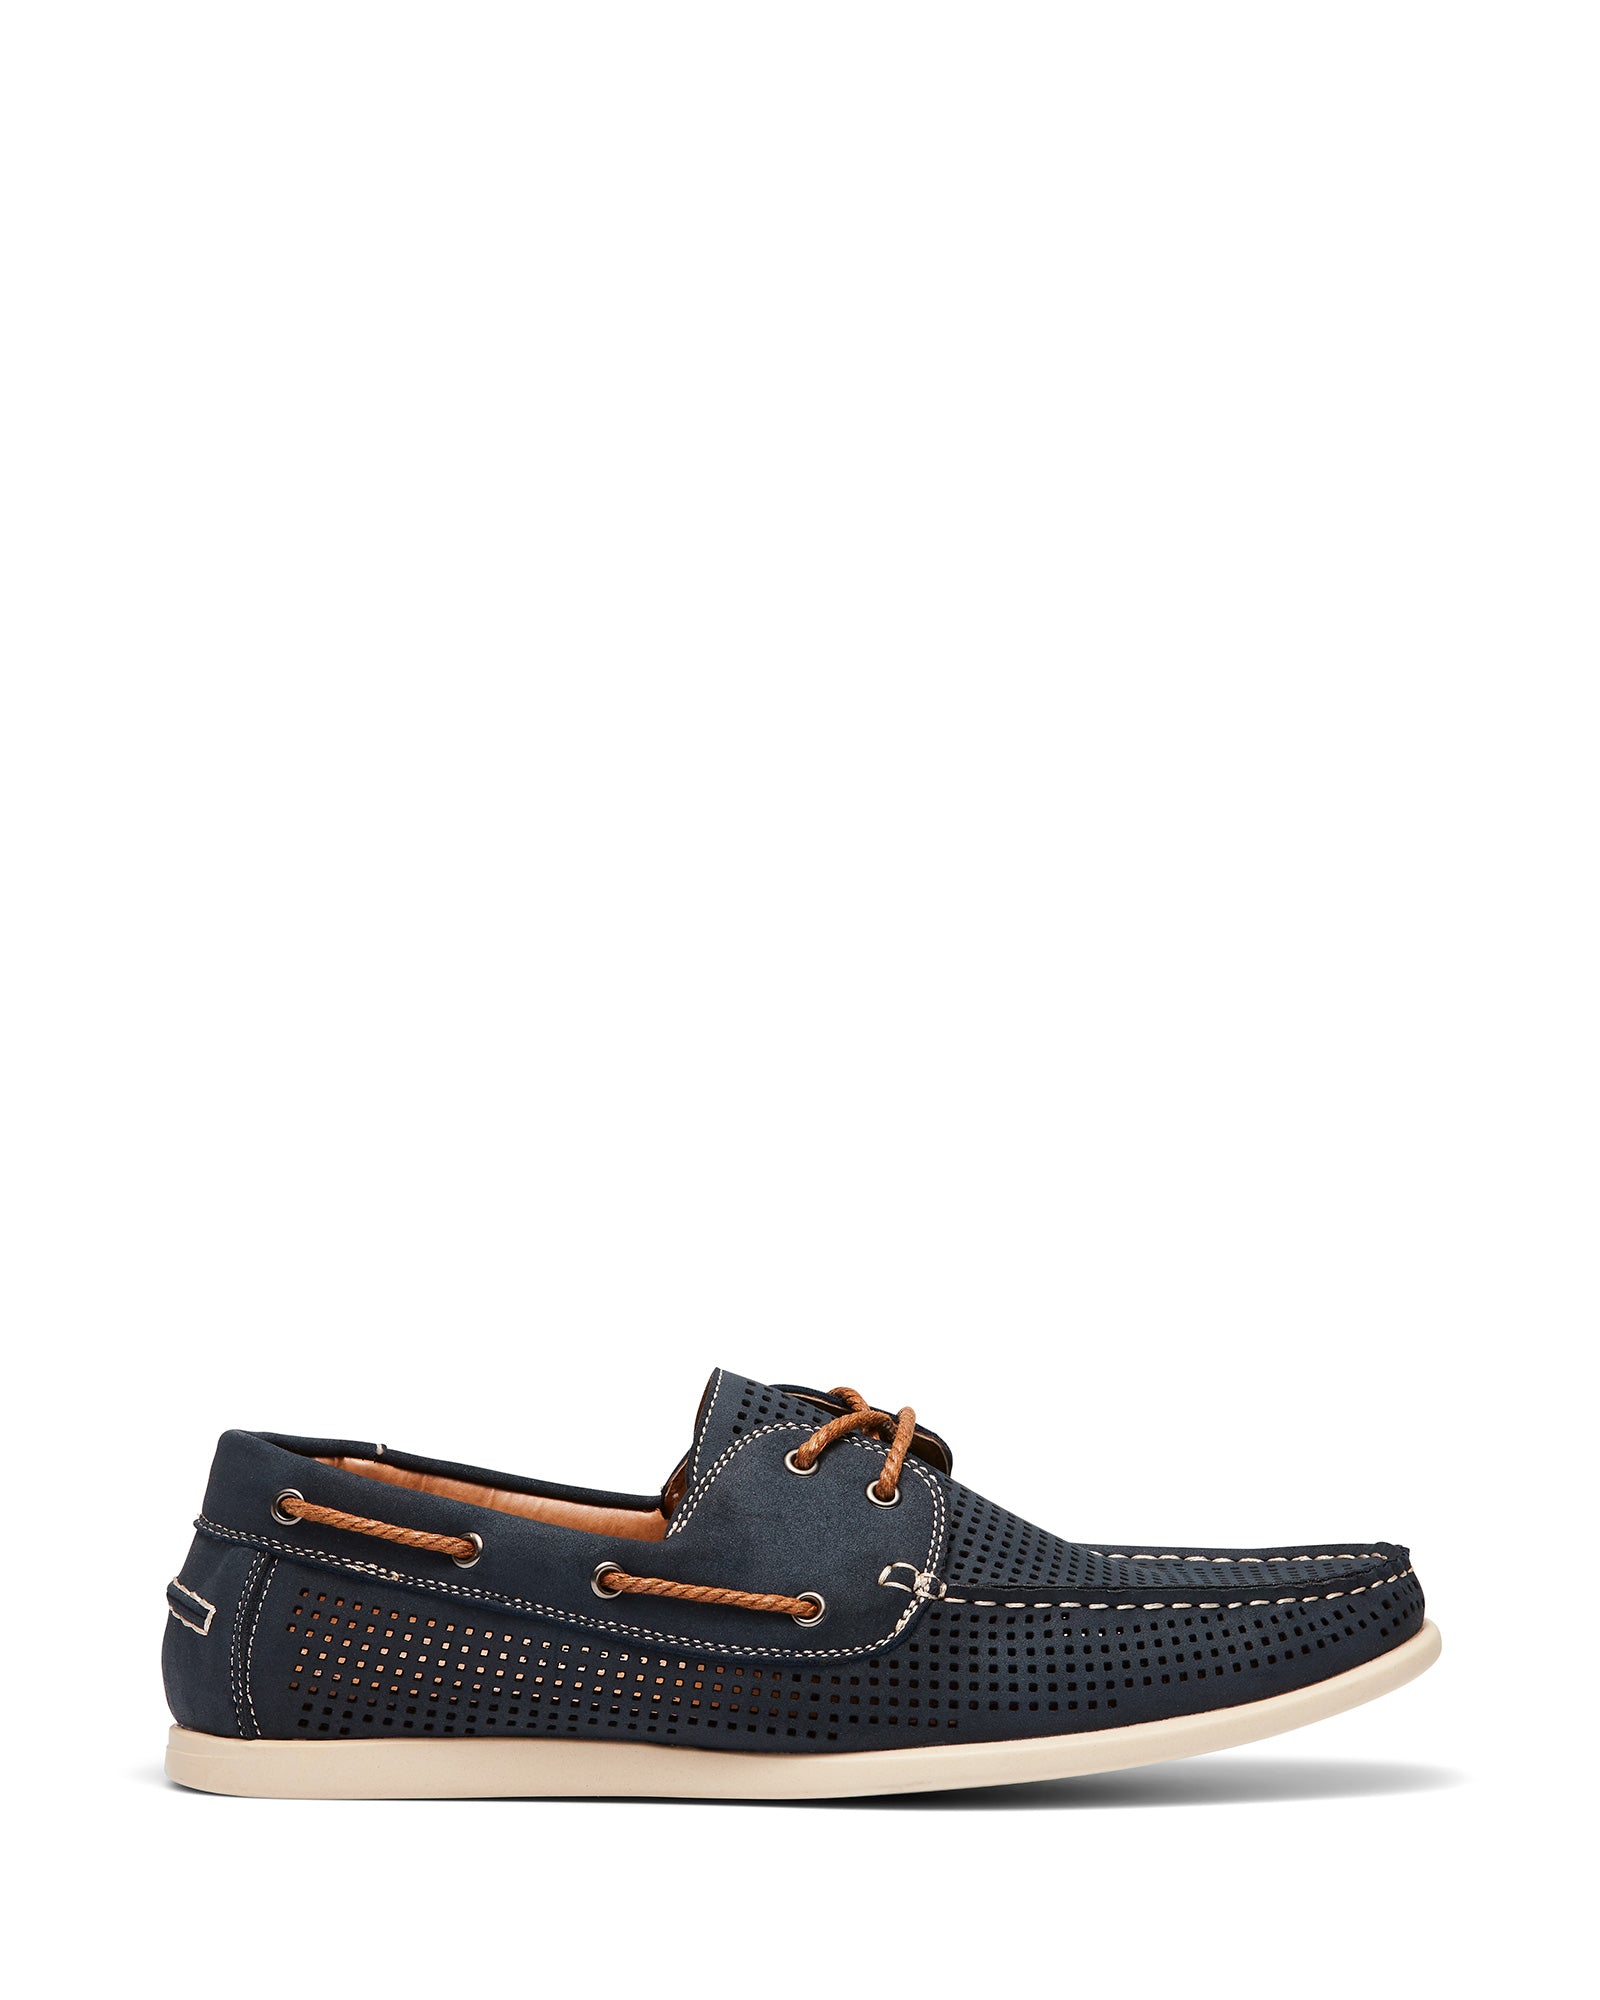 Uncut Shoes Maya Navy | Men's Boat Shoe | Deck Shoe | Lace Up | Perforated